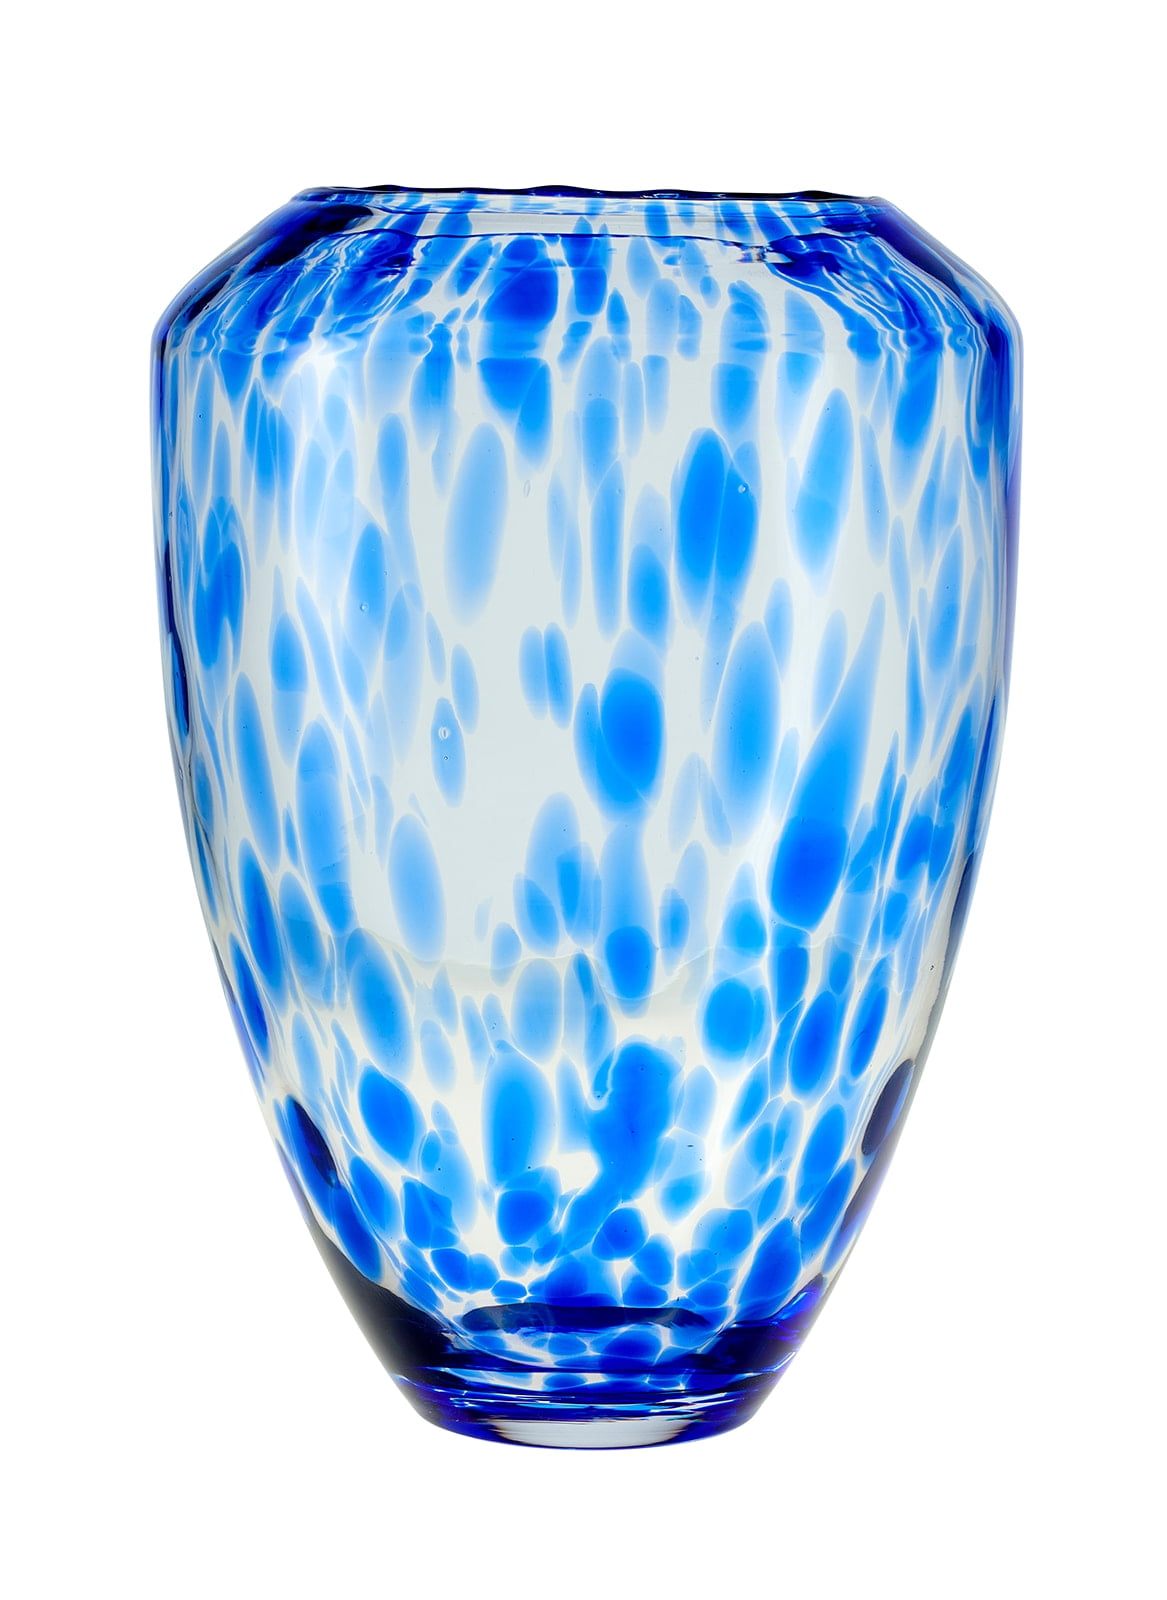 New Handmade Art Glass Polish Glass Ball Ornament Boxed 4” Cobalt Blue White 